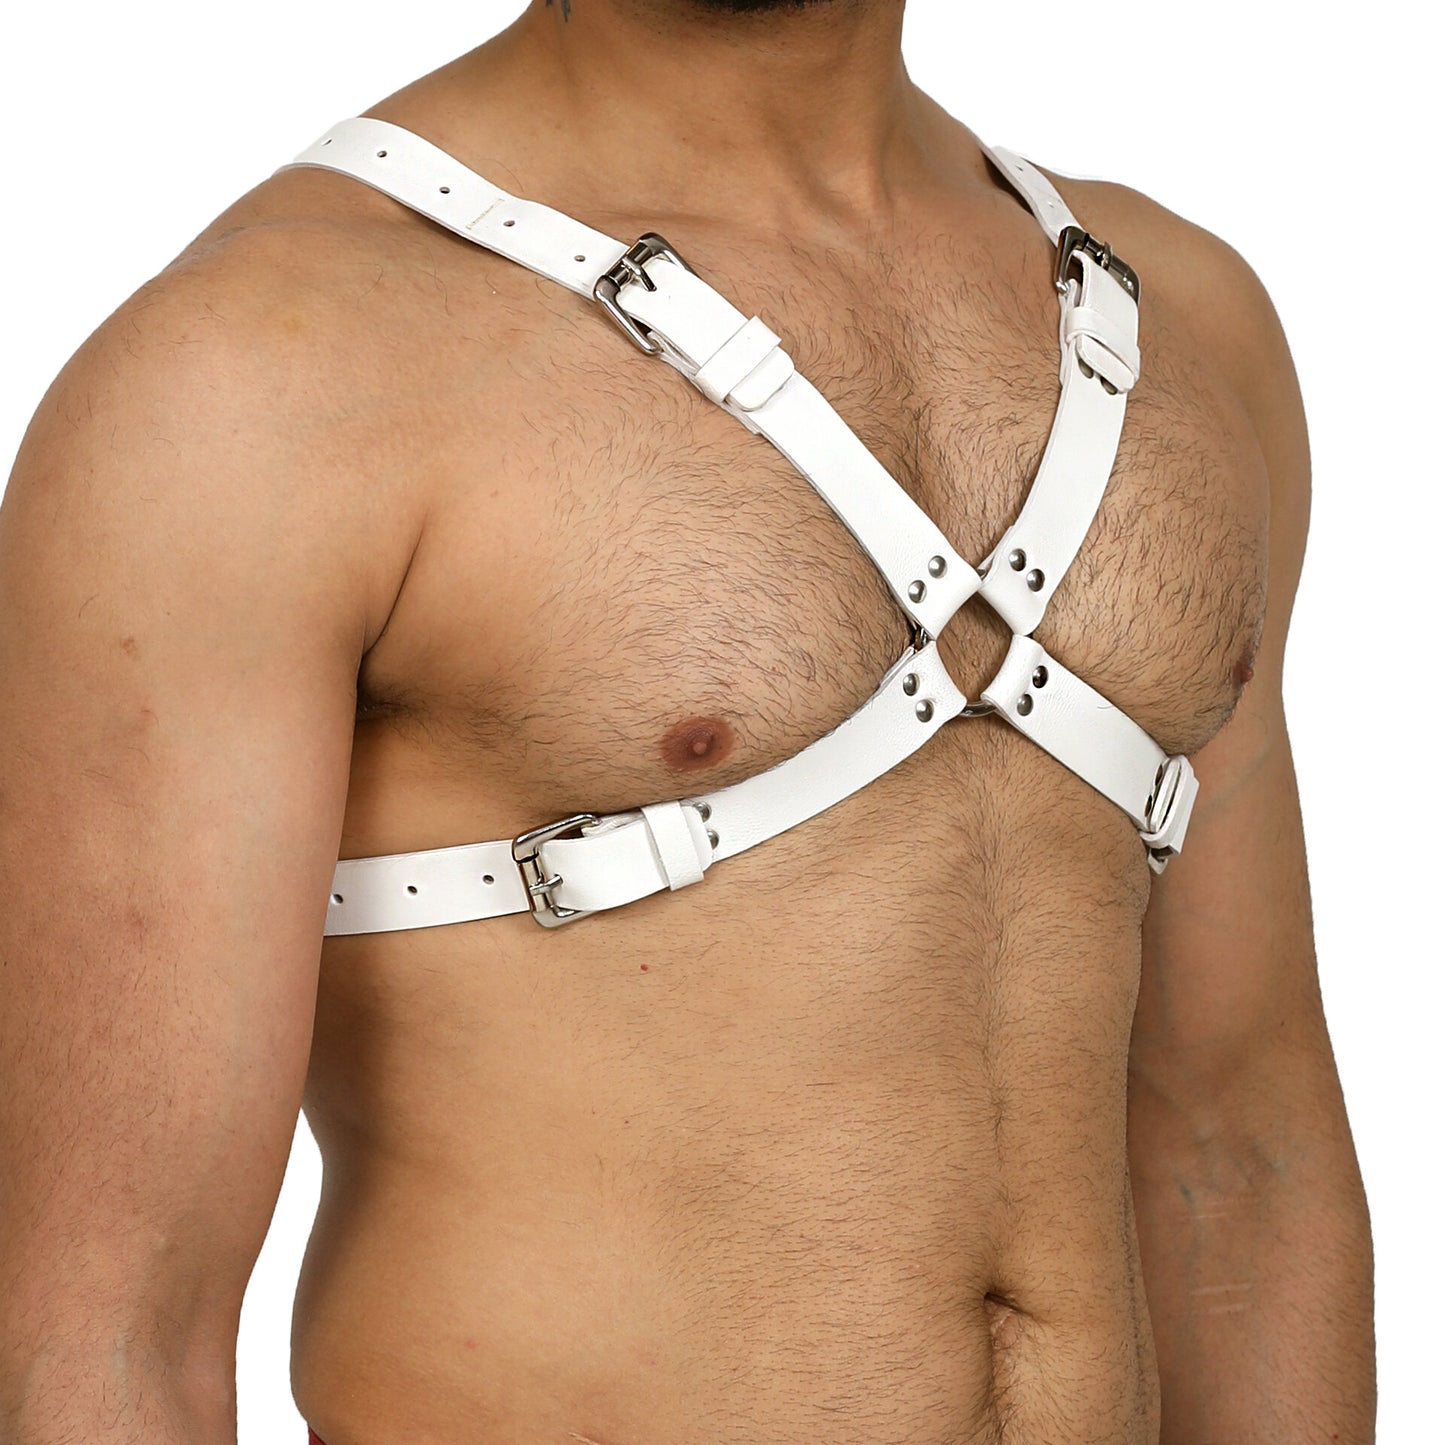 genuine leather body harness india